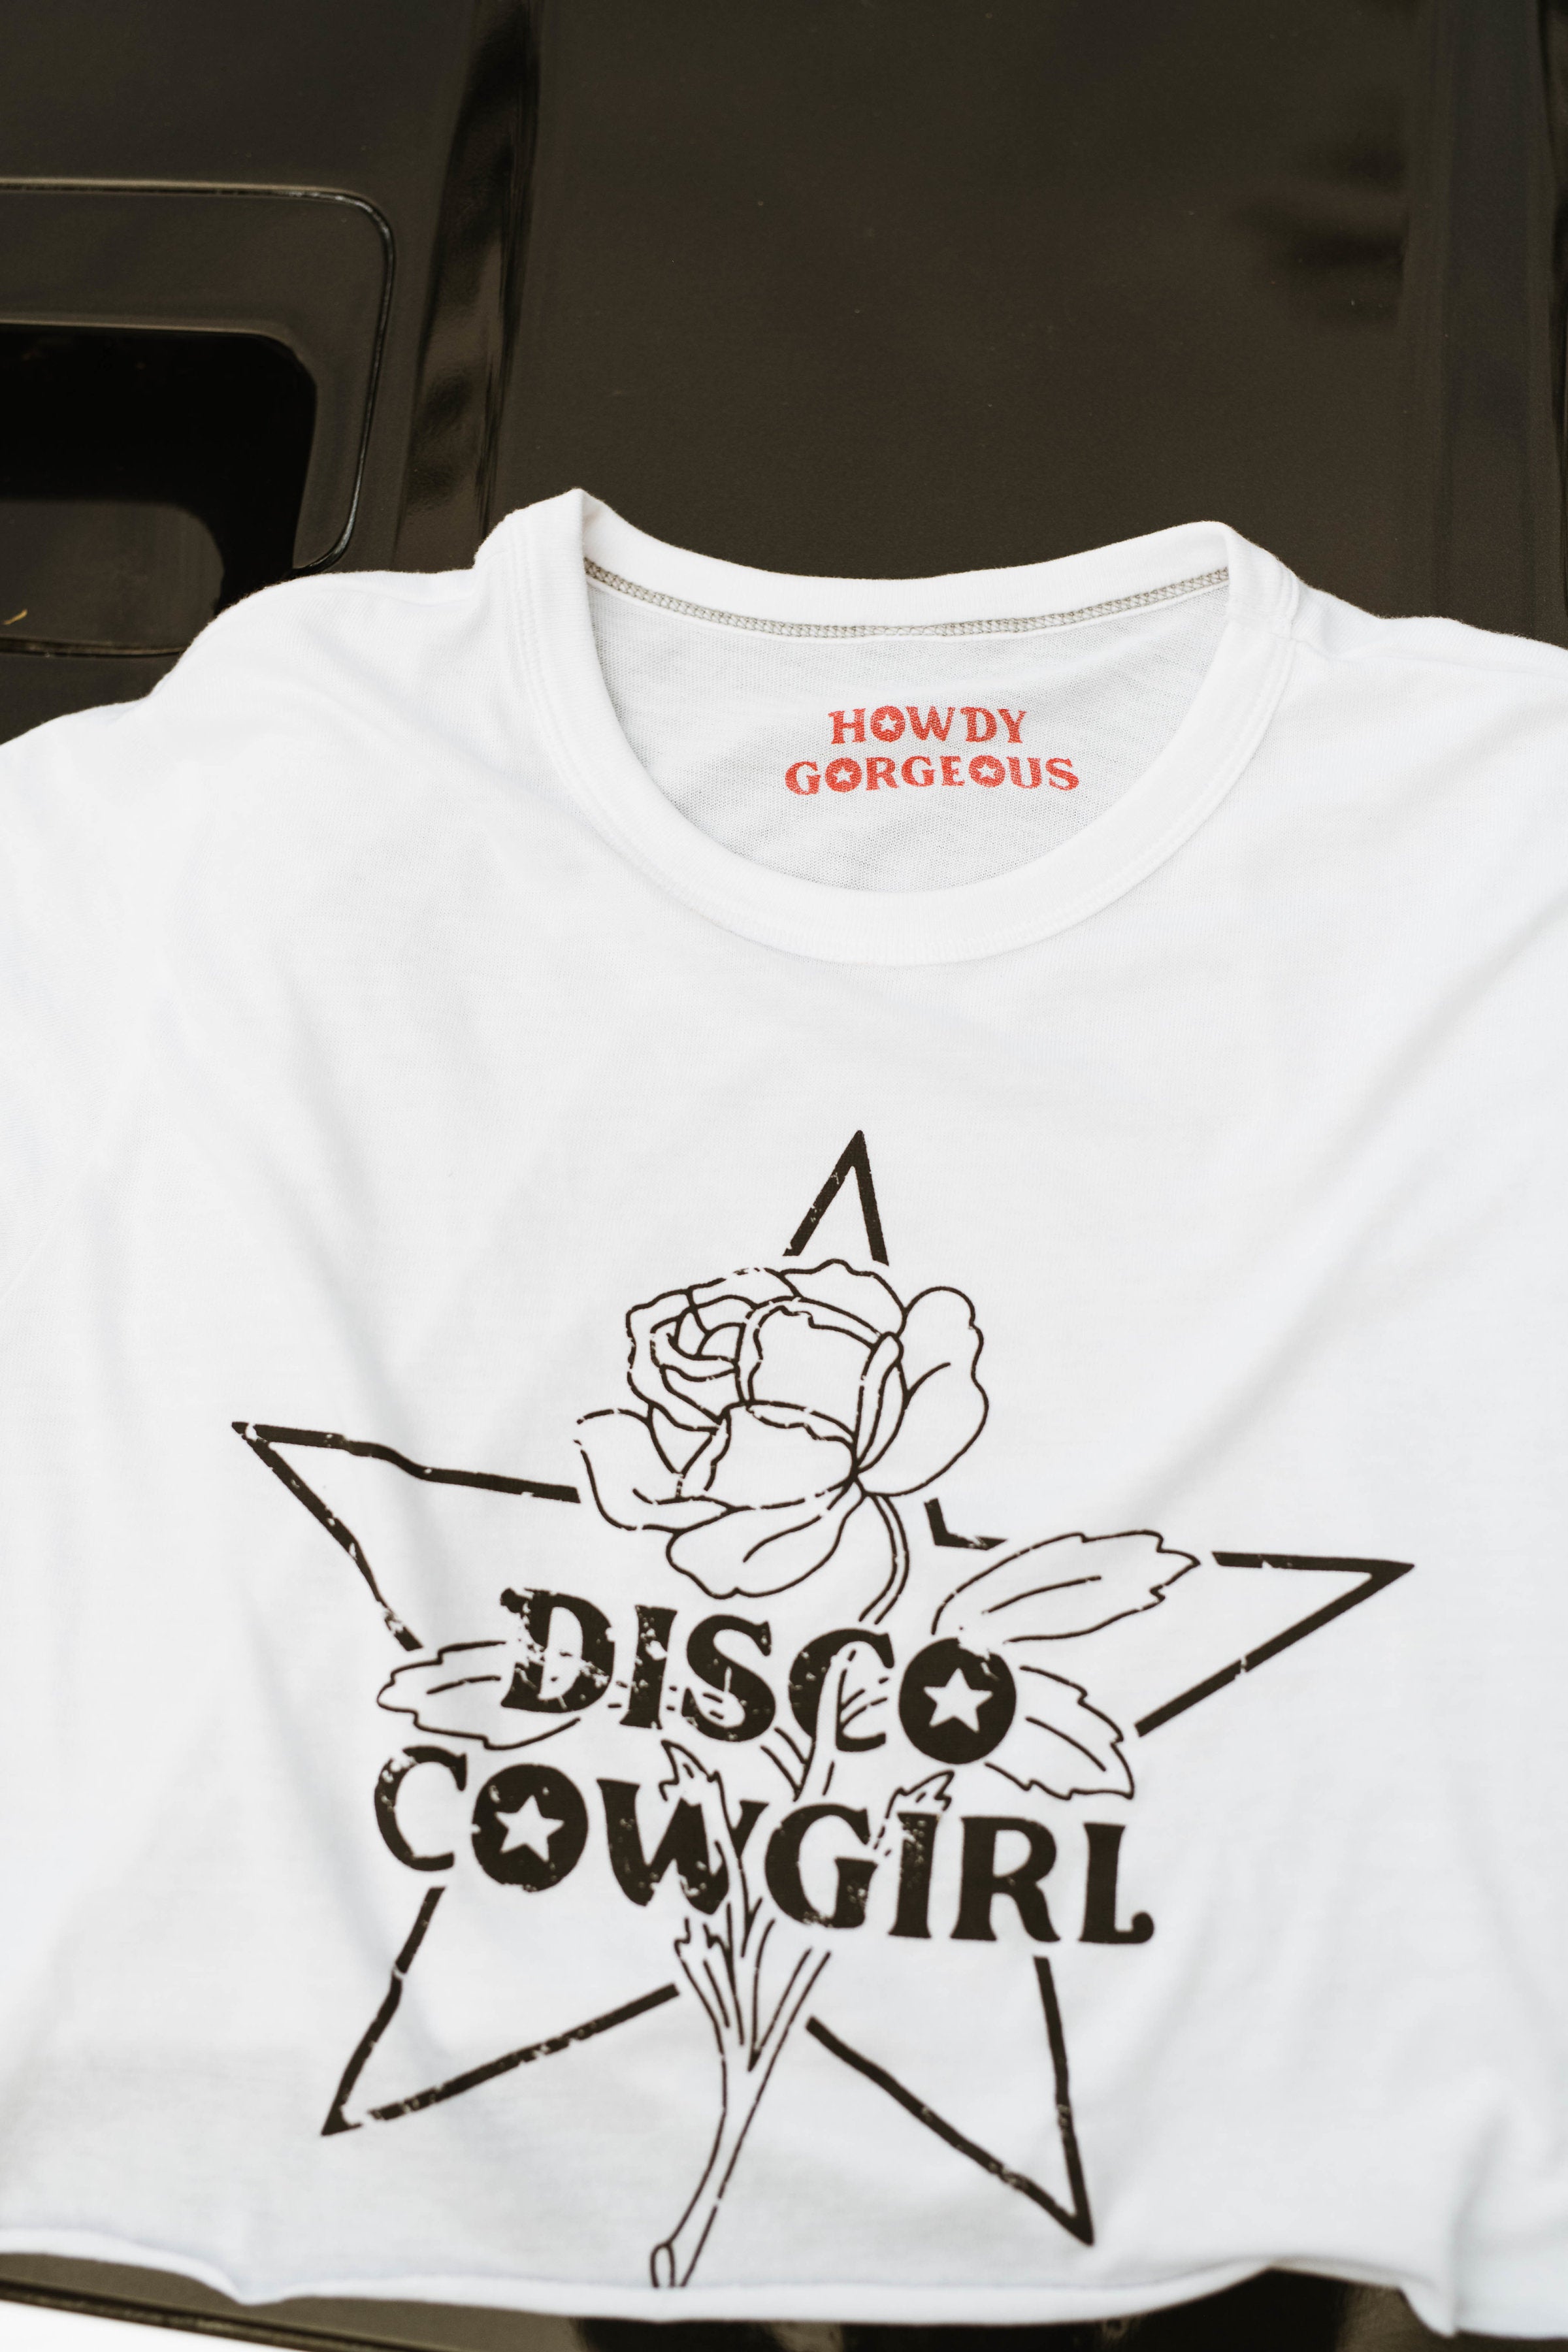 disco cowgirl shirt